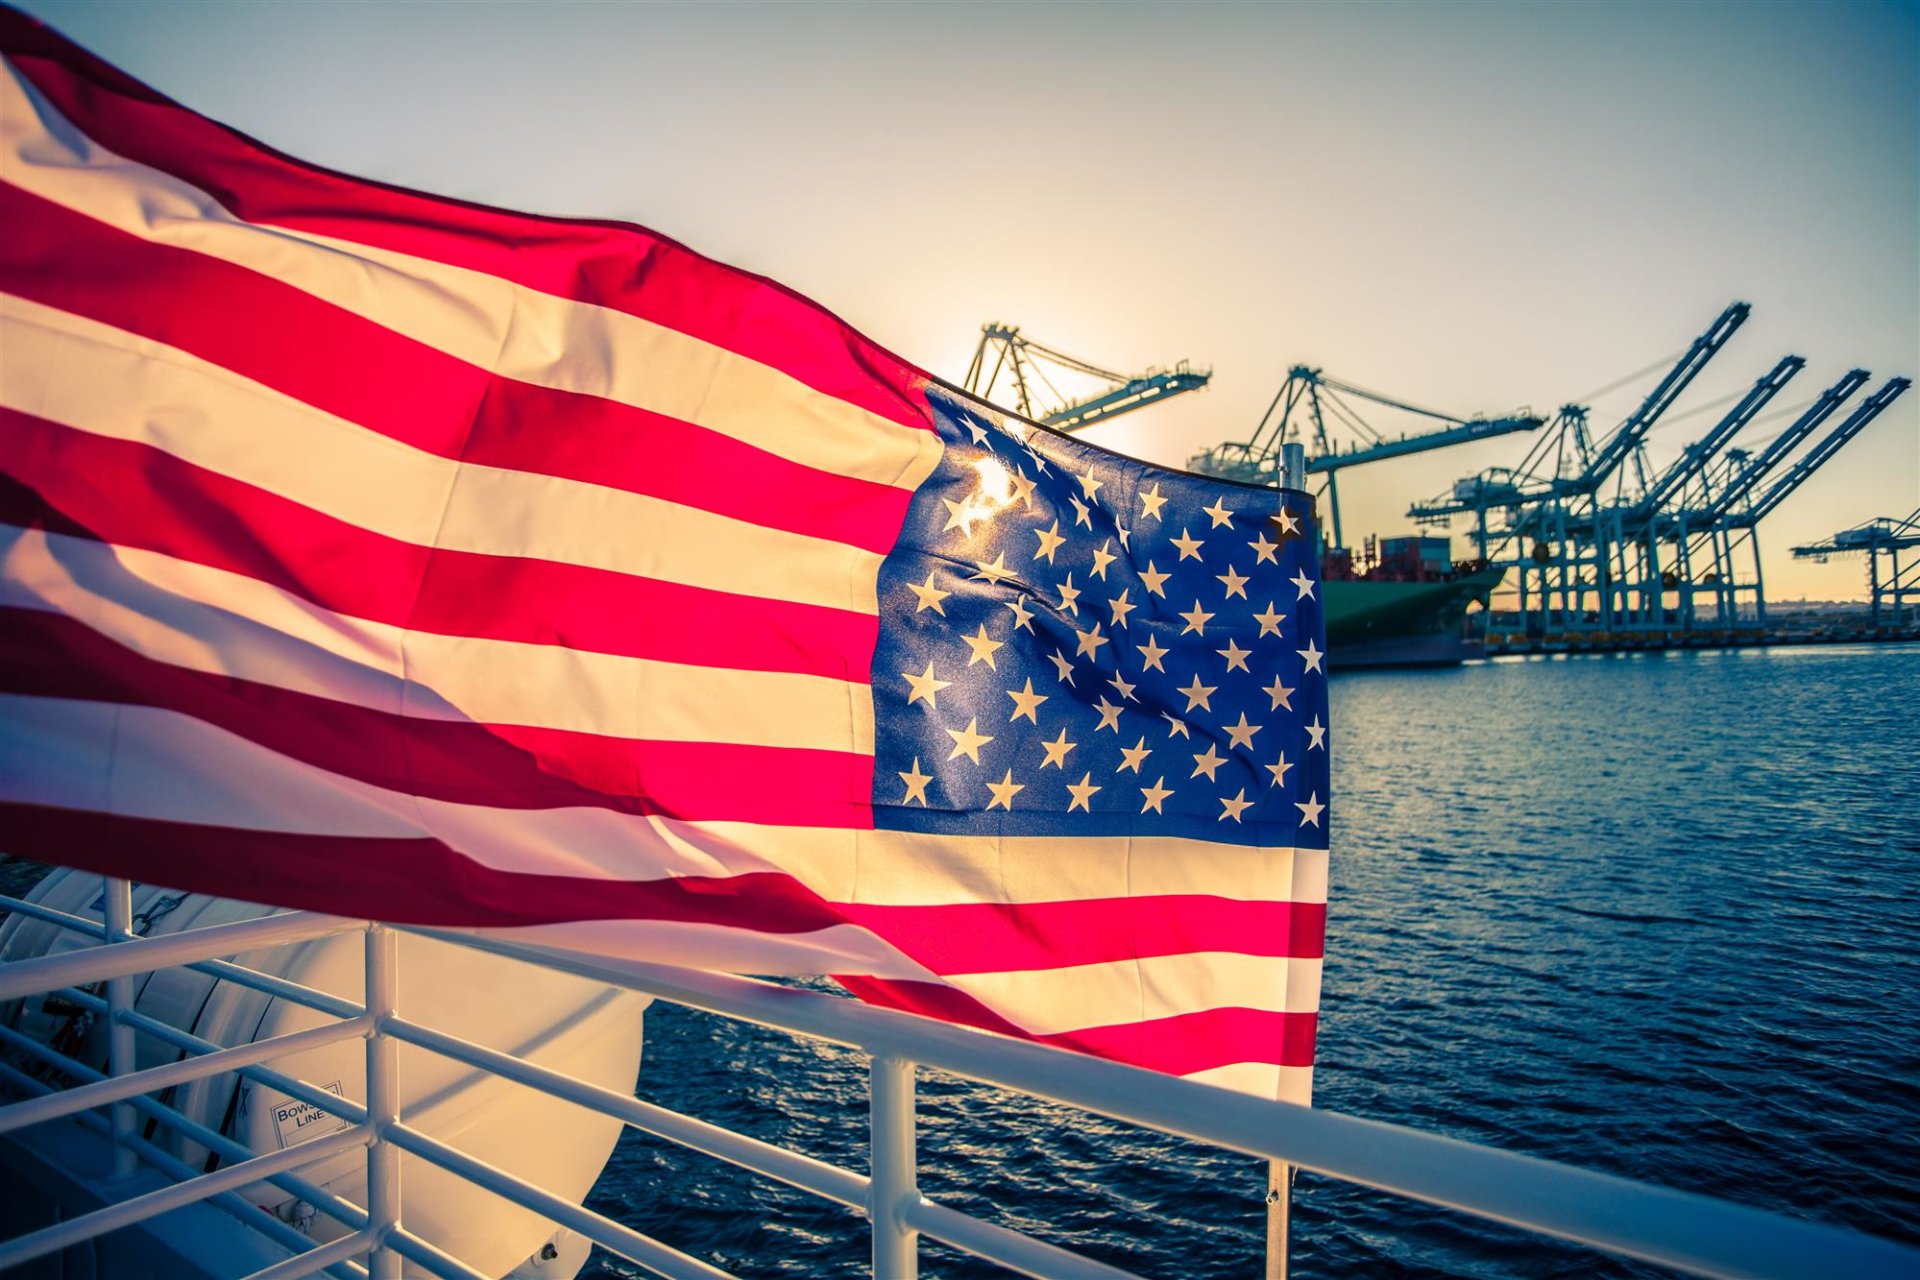 american flag waving on a boat